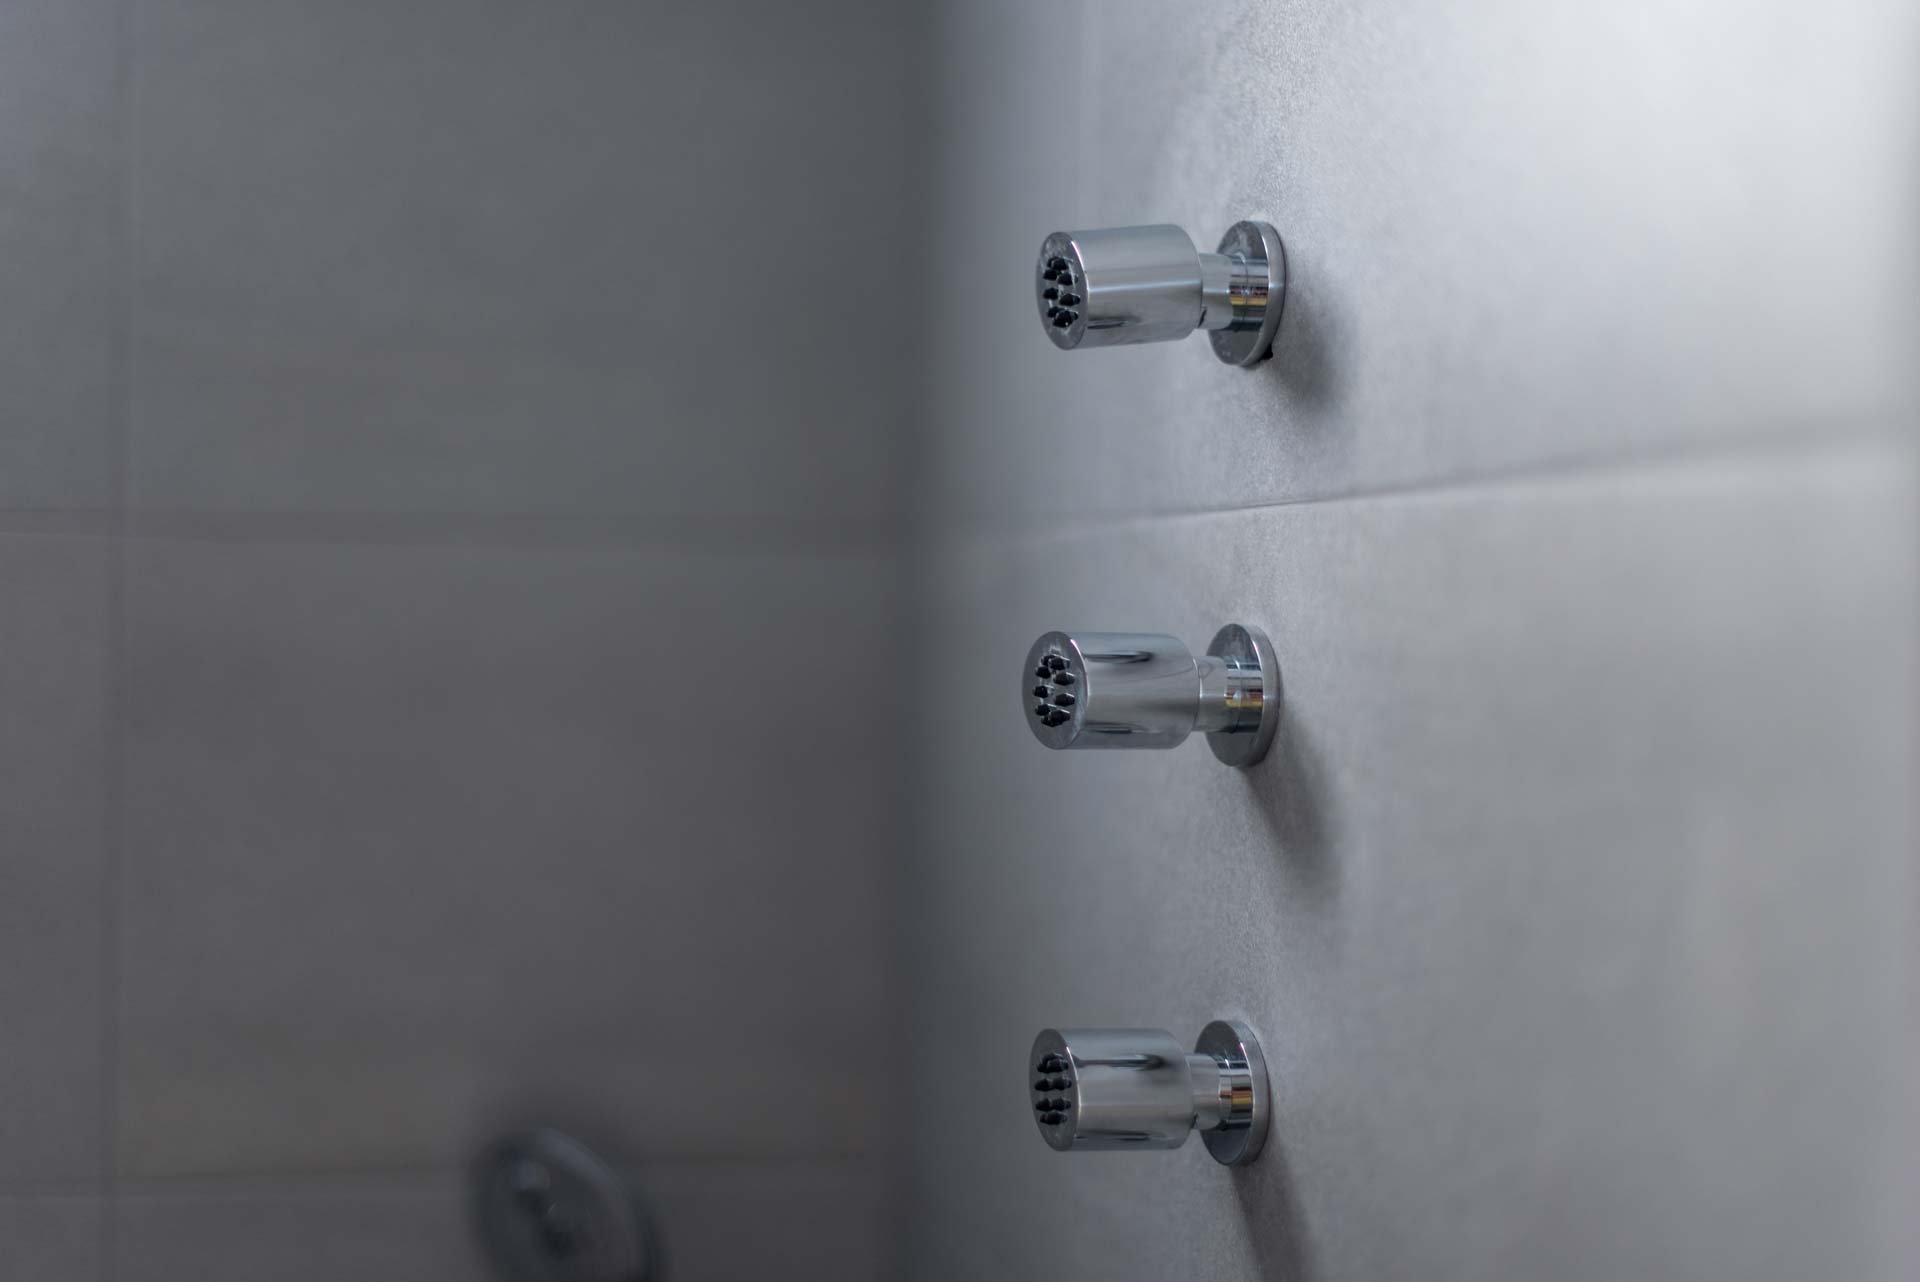 Premium Spa Suite - Hydromassage in shower